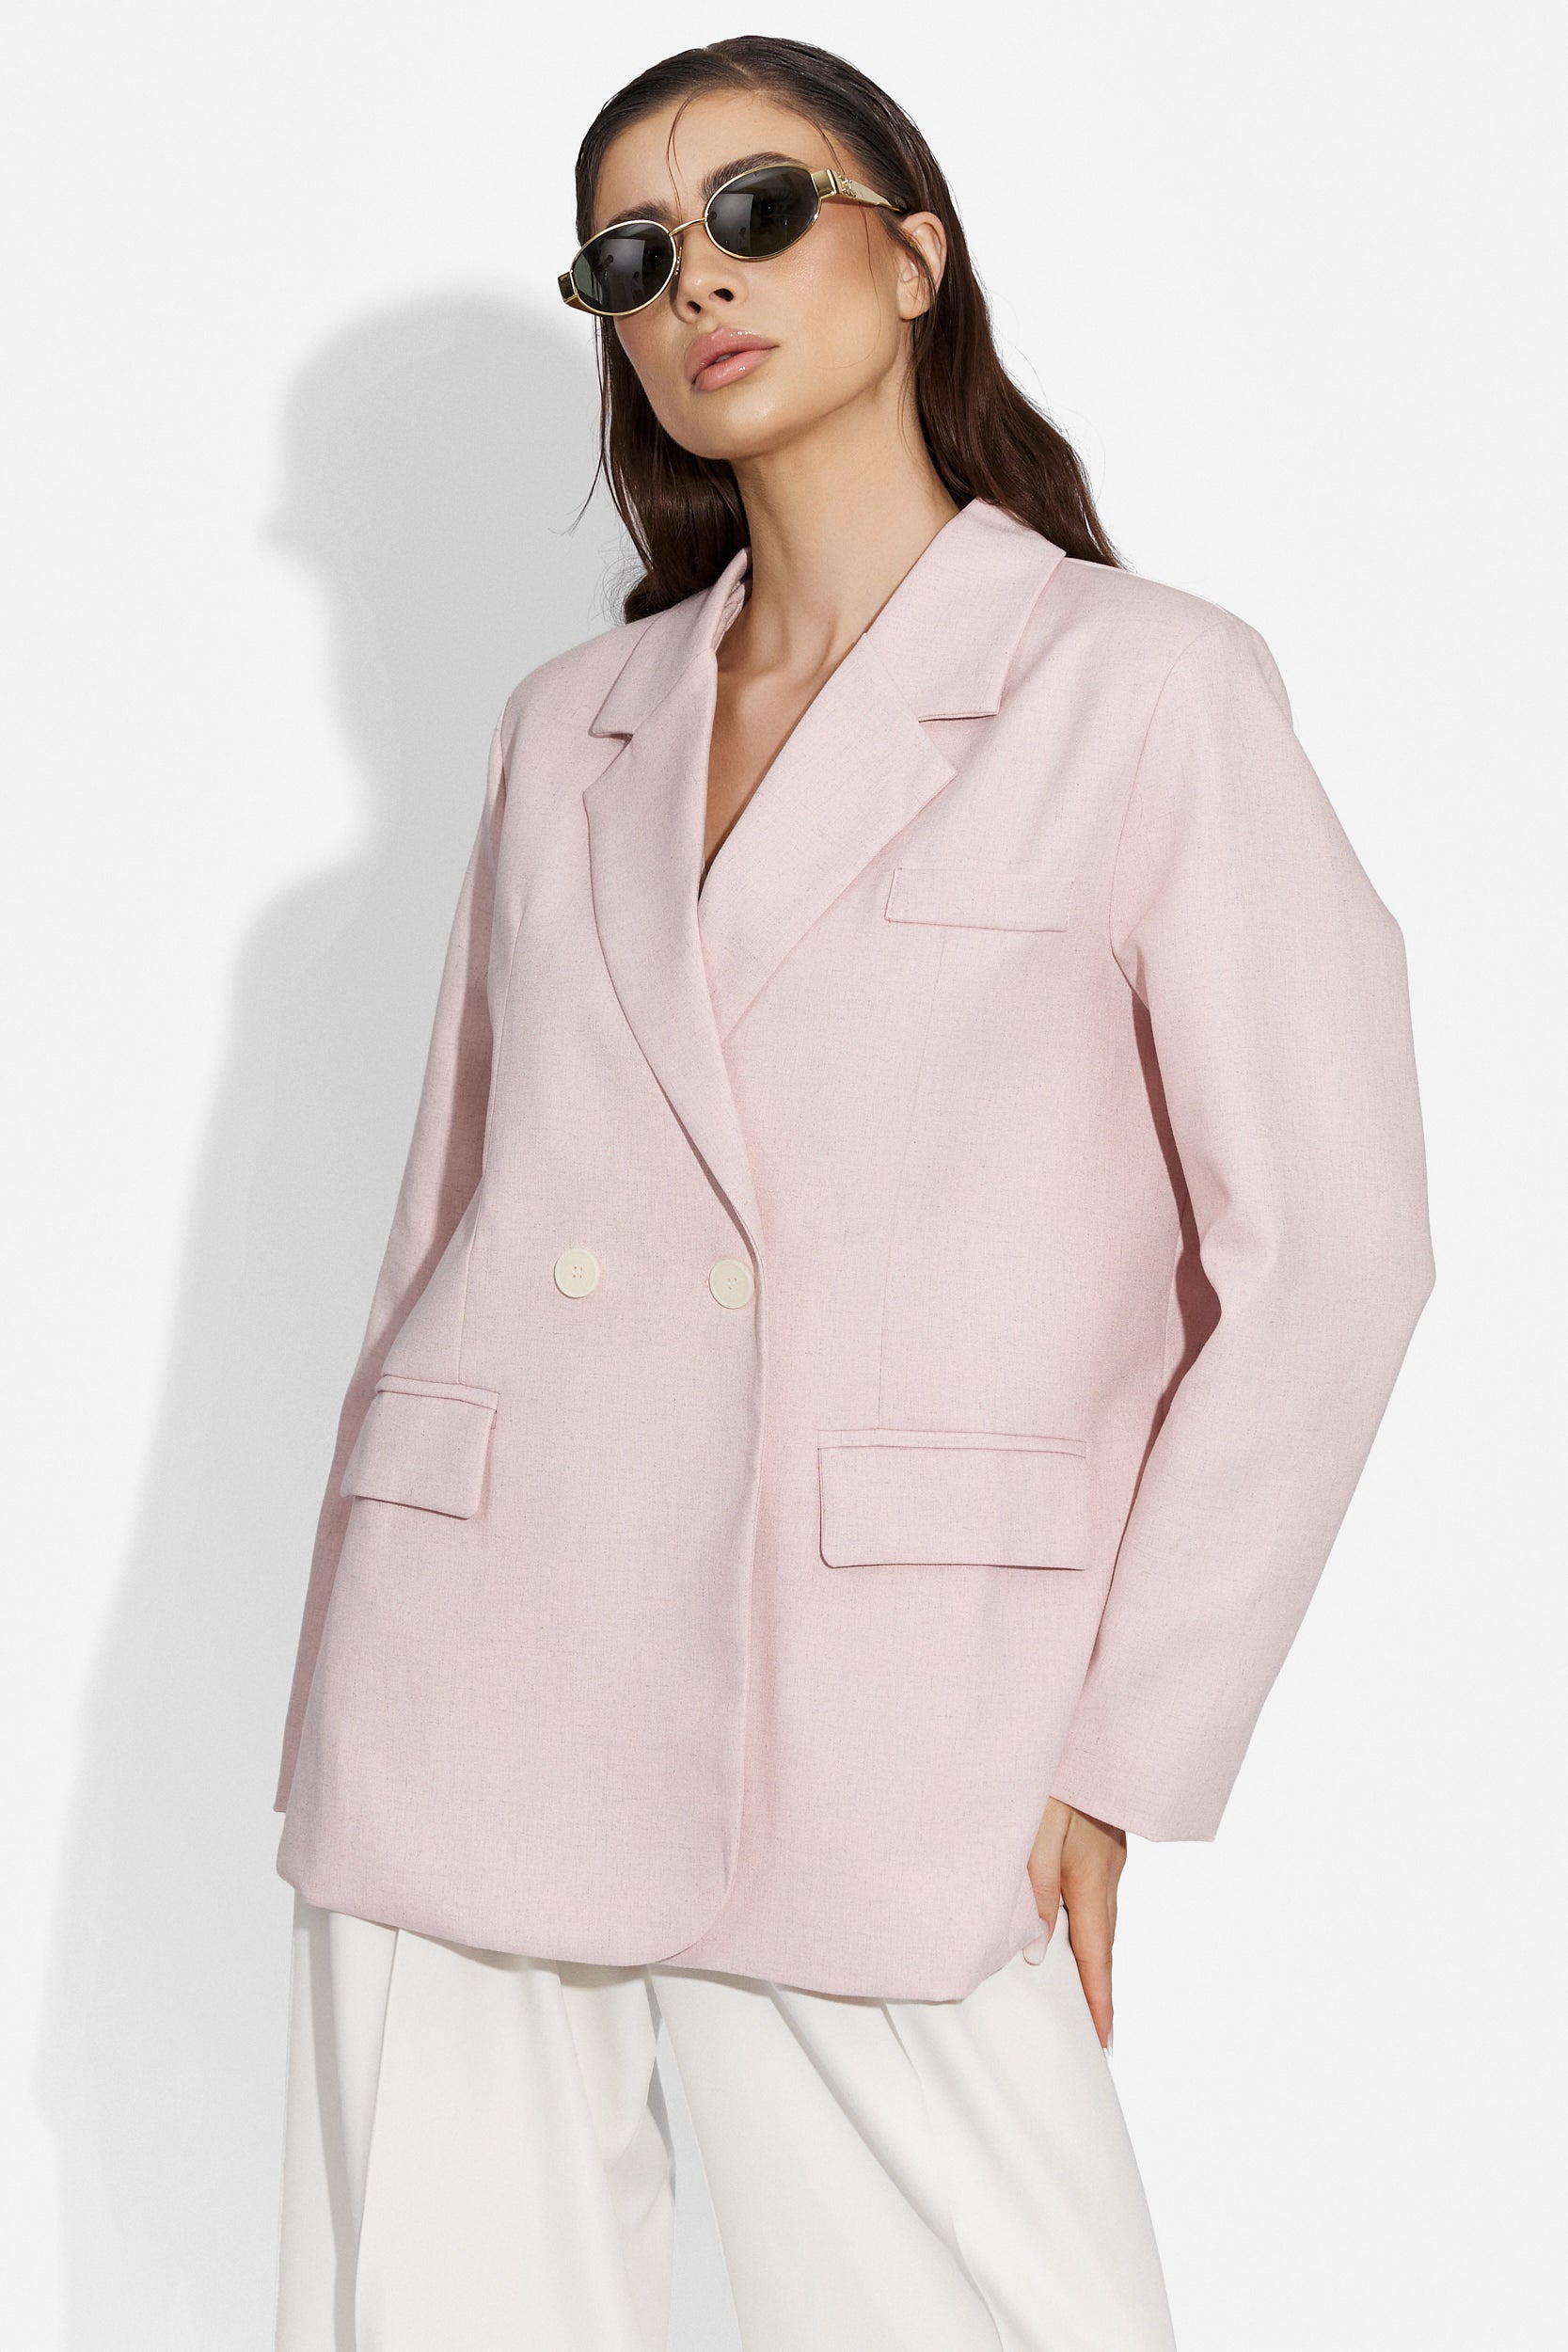 Elegant pink ladies jacket Marymia Bogas